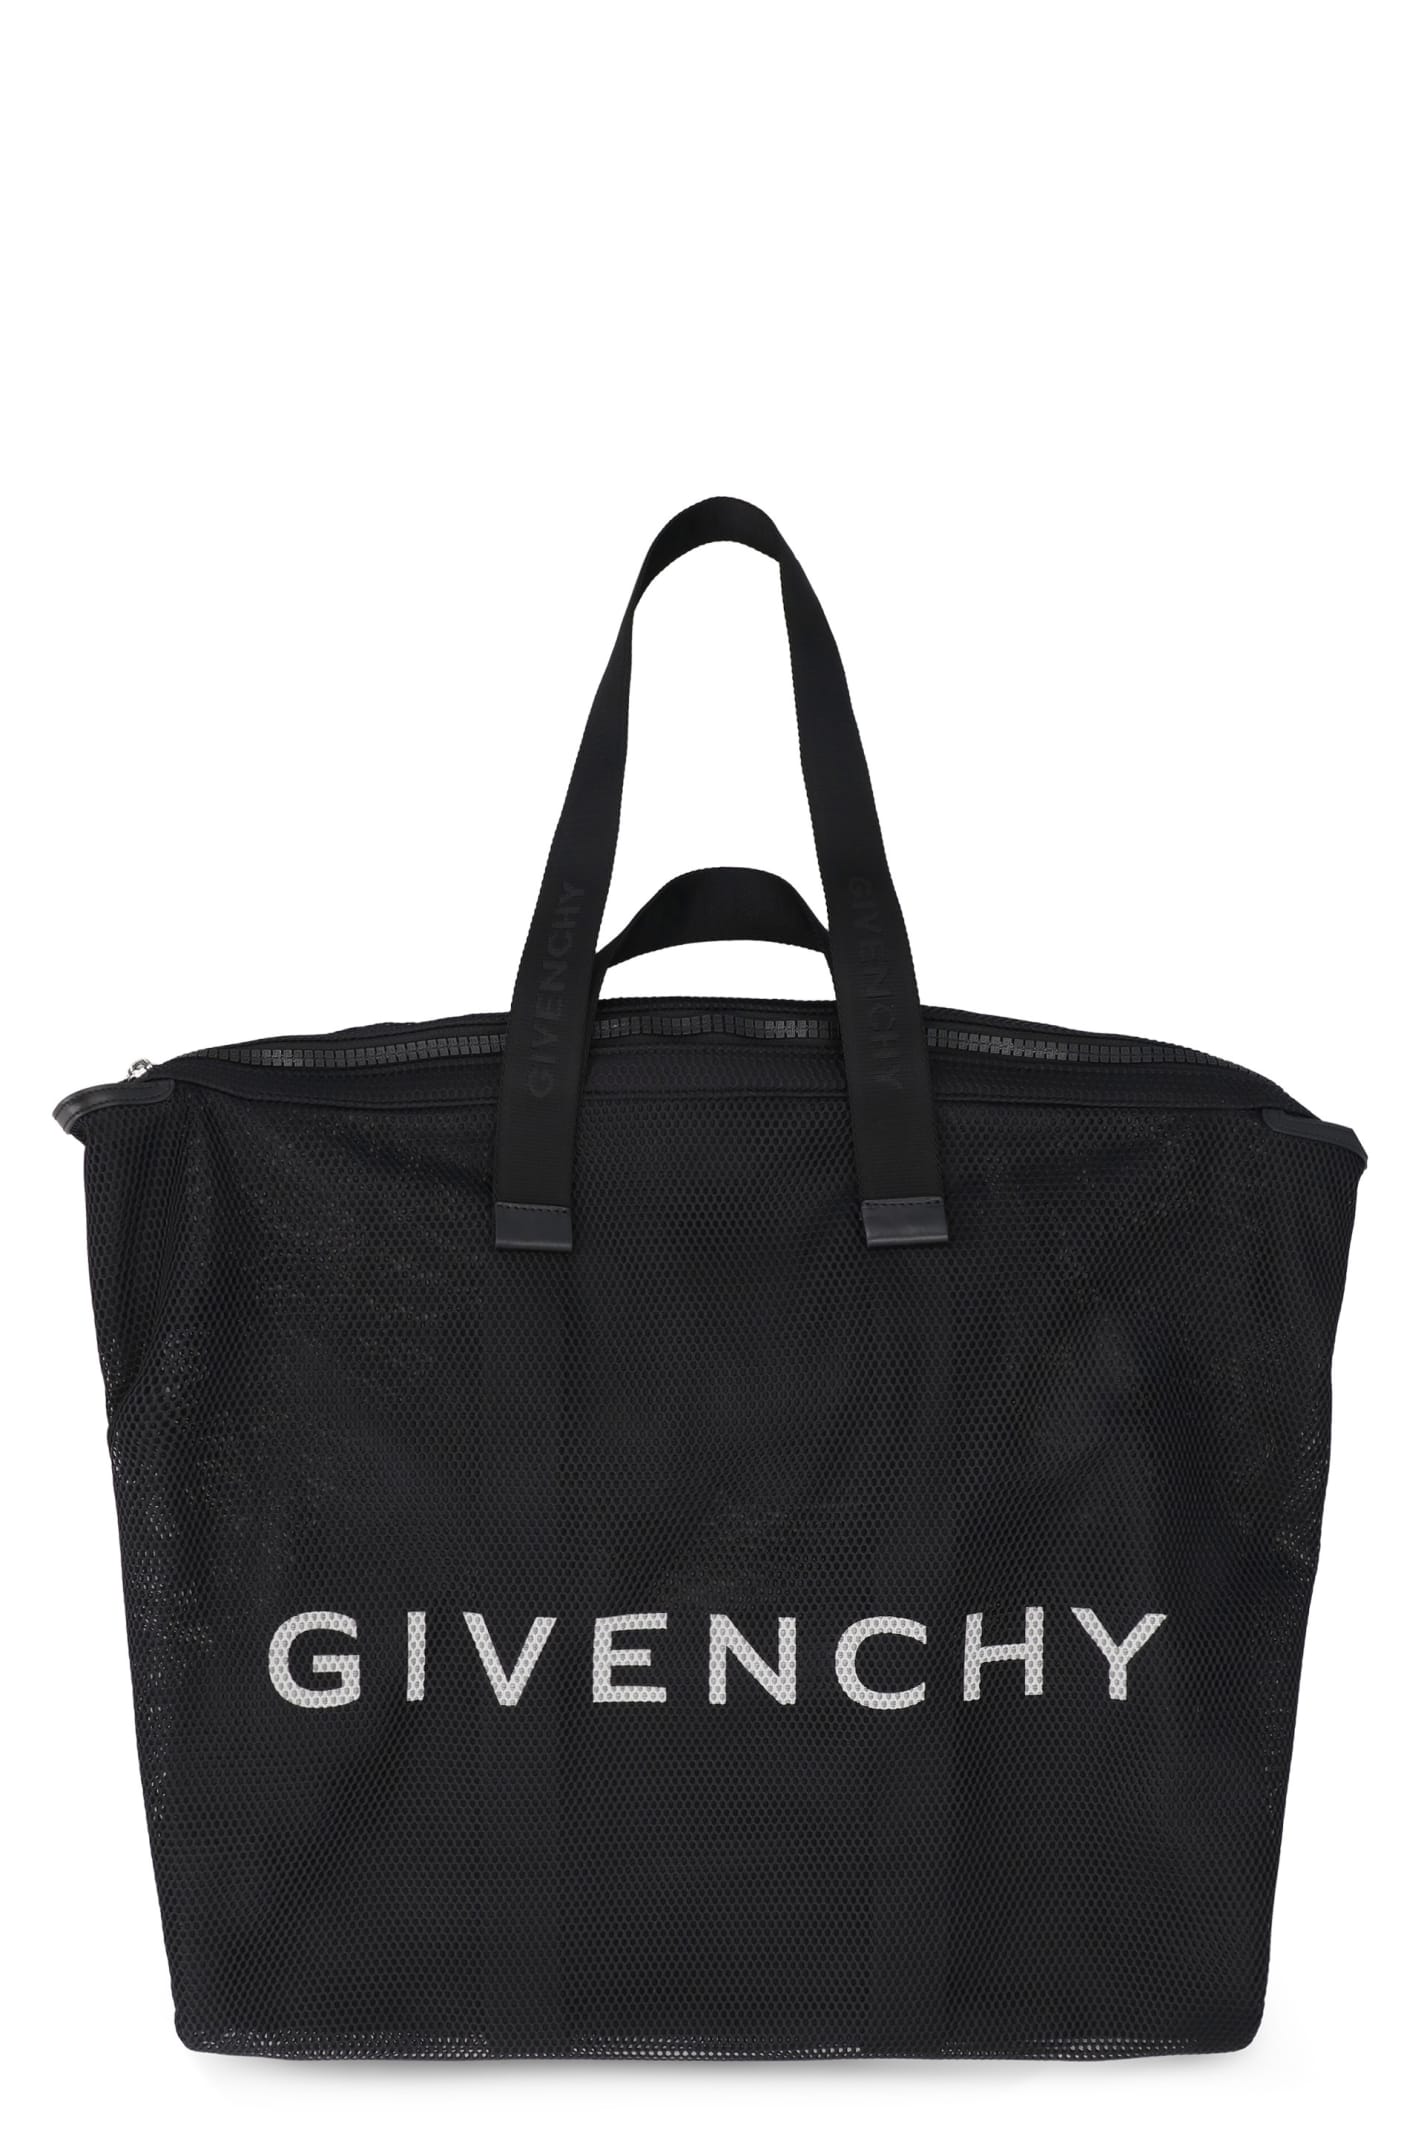 Givenchy G-shopper Mesh Tote Bag In Black